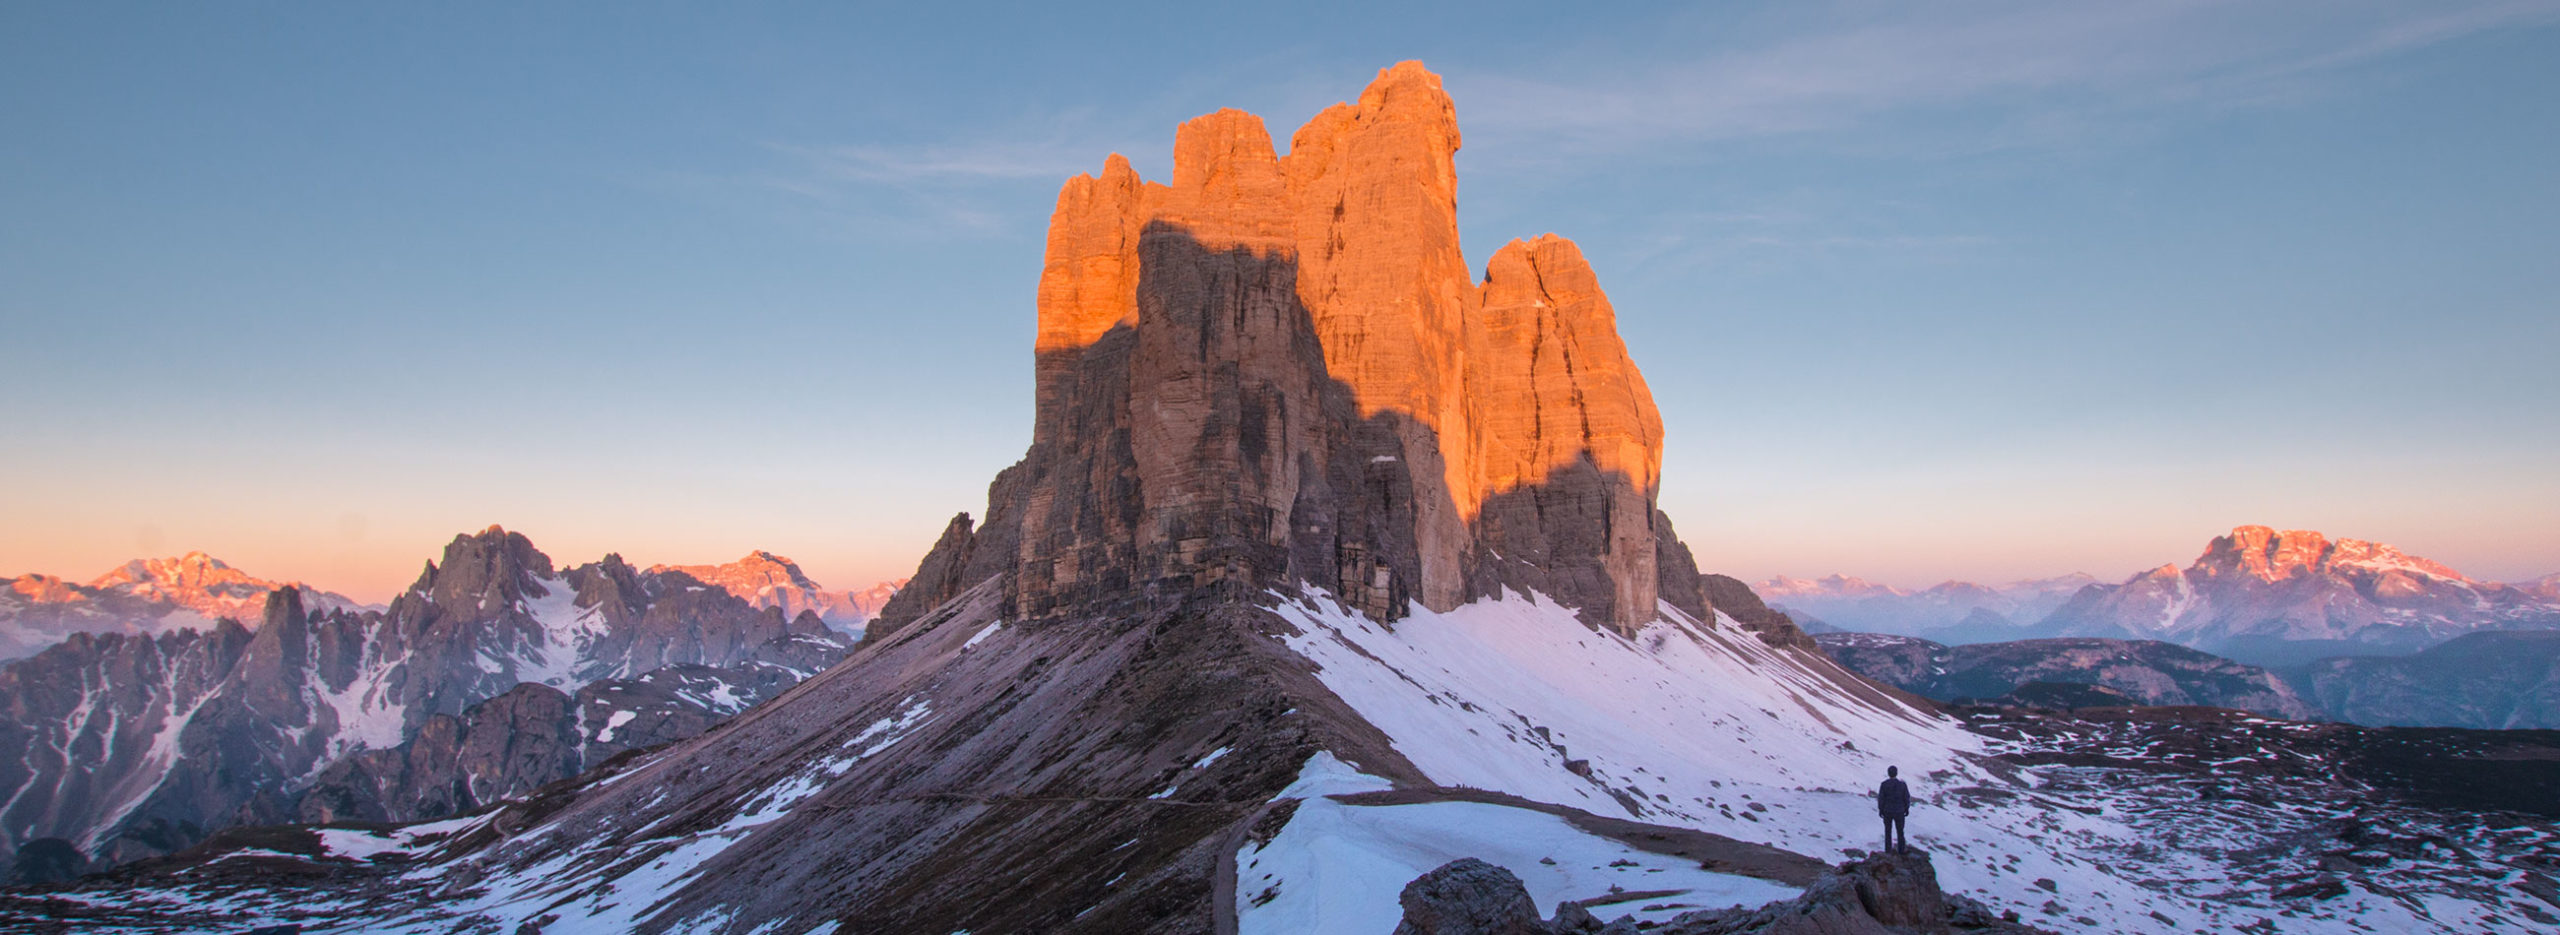 Lever de soleil, Tre Cime di Lavaredo, Dolomites, Italie / Sunrise, Tre Cime di Lavaredo, Dolomites, Italy